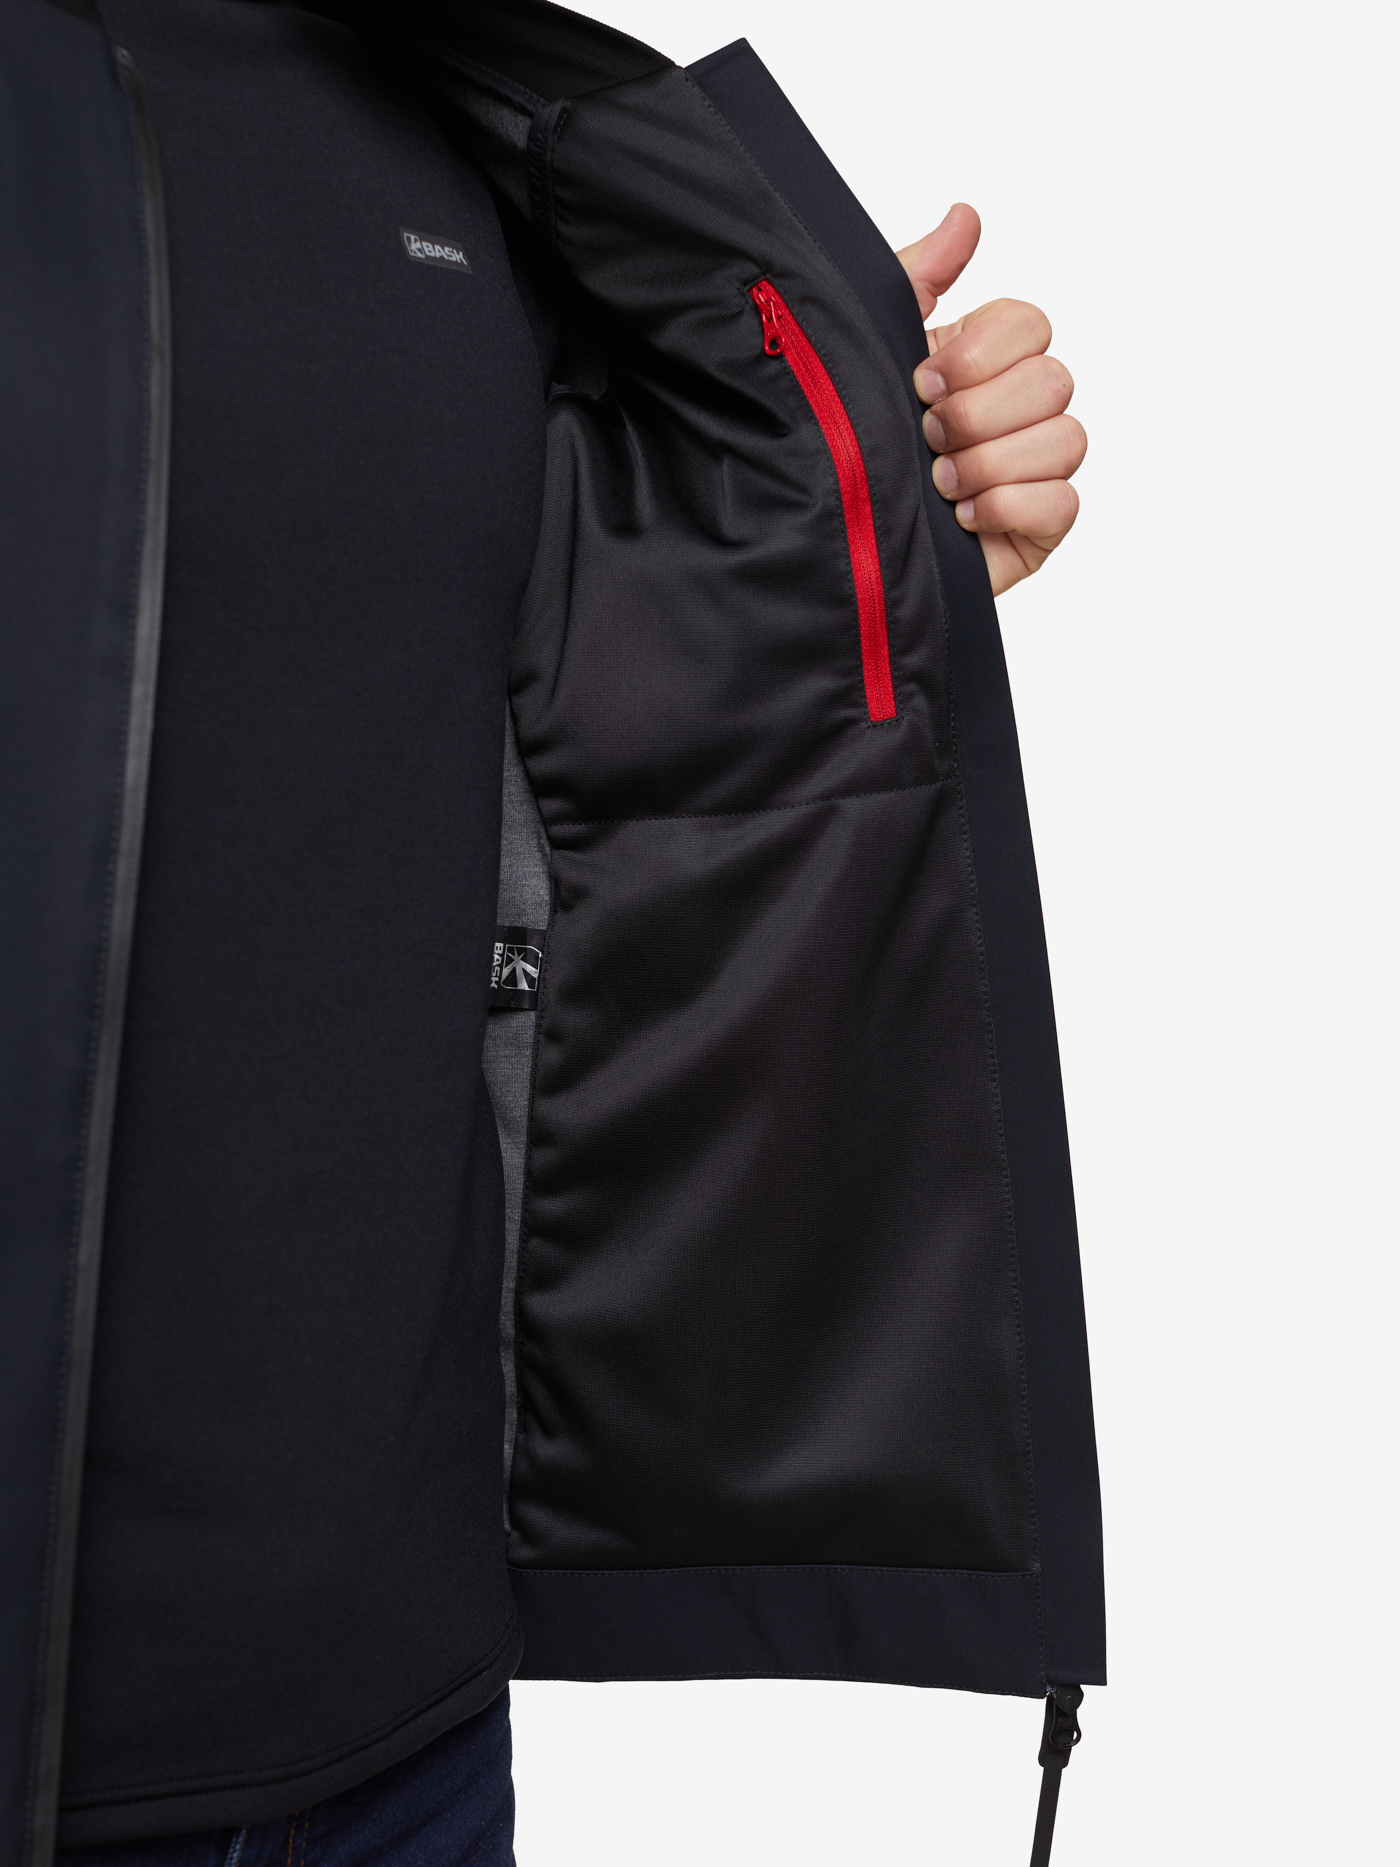 Куртка BASK, размер 44, цвет черный 19145-9009-044 Cube - фото 8